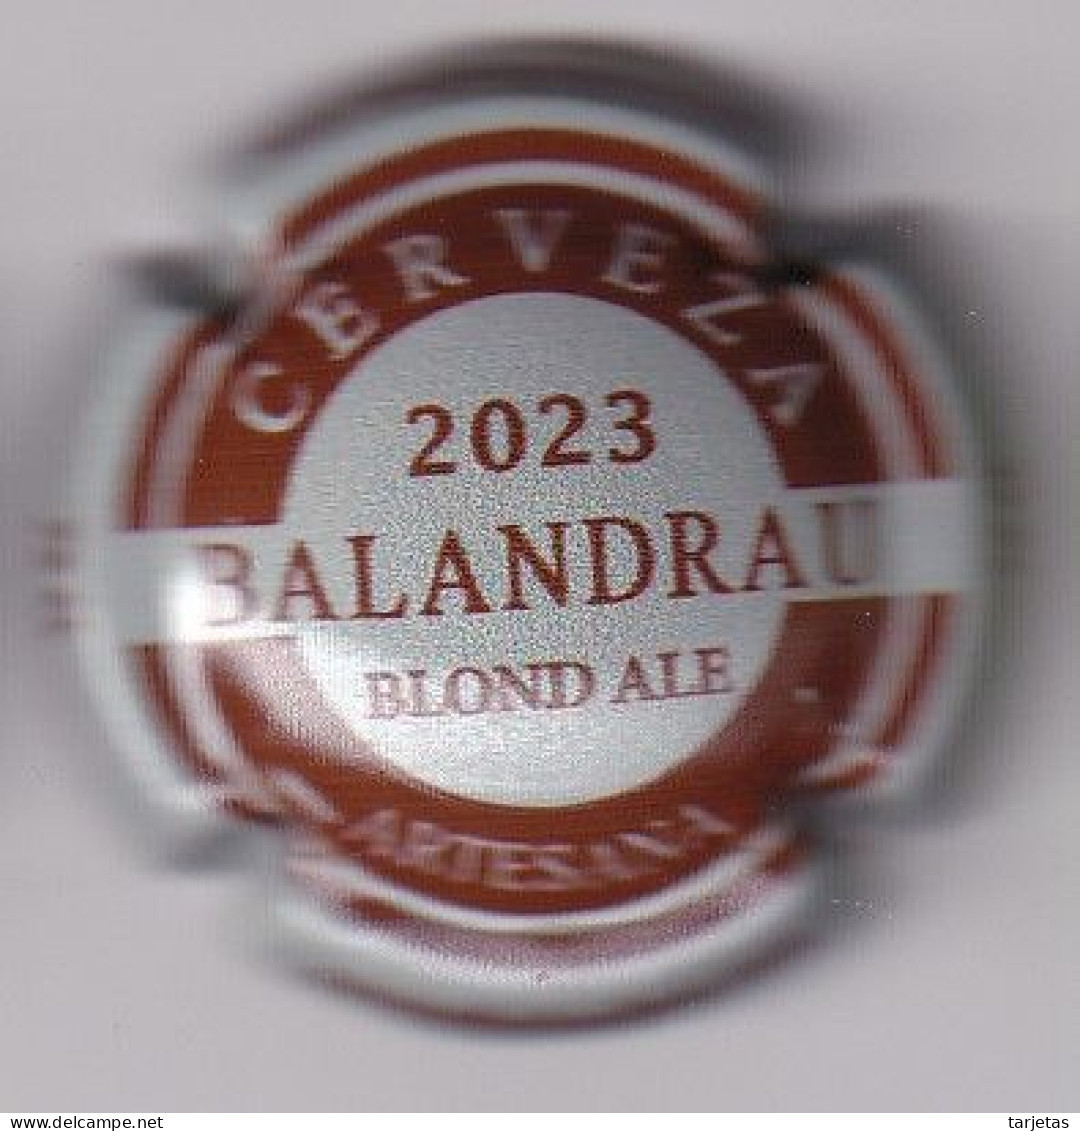 CHAPA DE CERVEZA ARTESANA BALANDRAU BLOND ALE 2023 (BEER-BIERE) CORONA - Bier